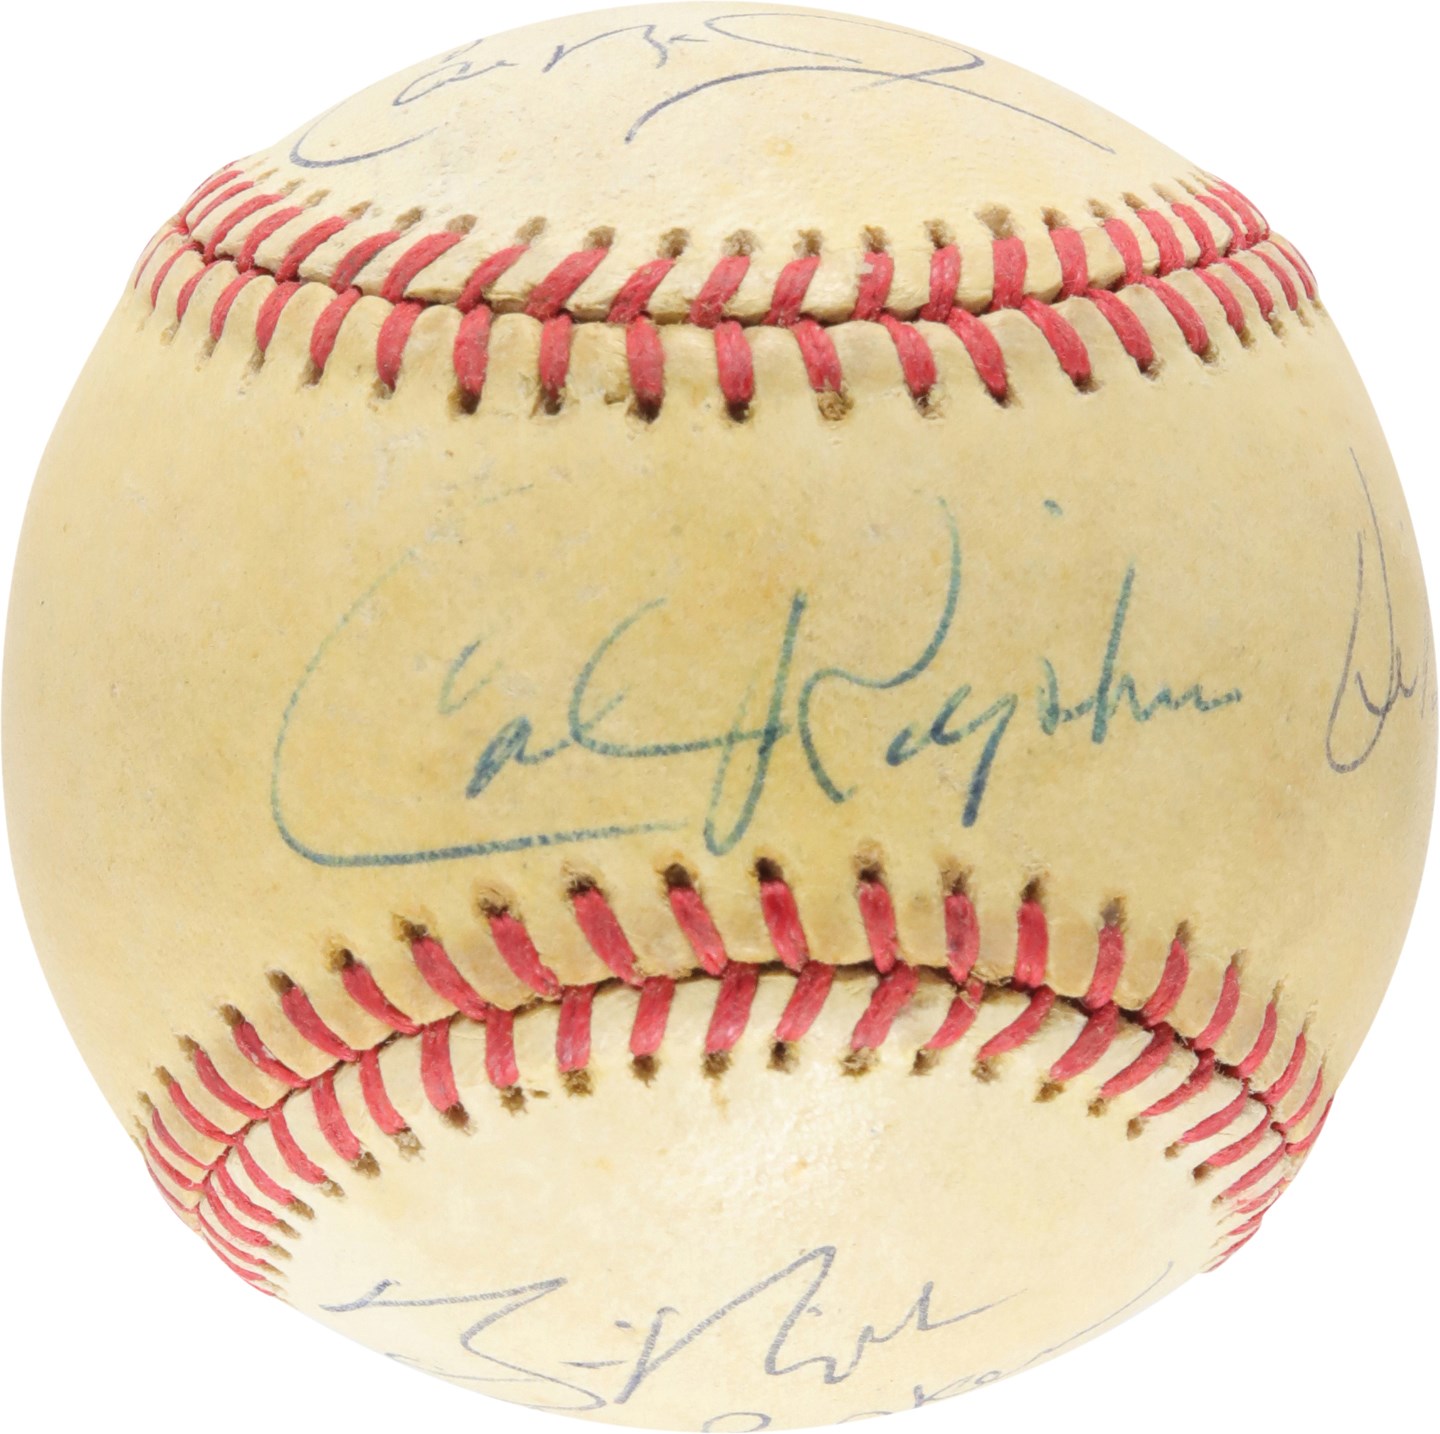 Baseball Autographs - Call Ripken Family-Signed Baseball by Six Members (PSA)